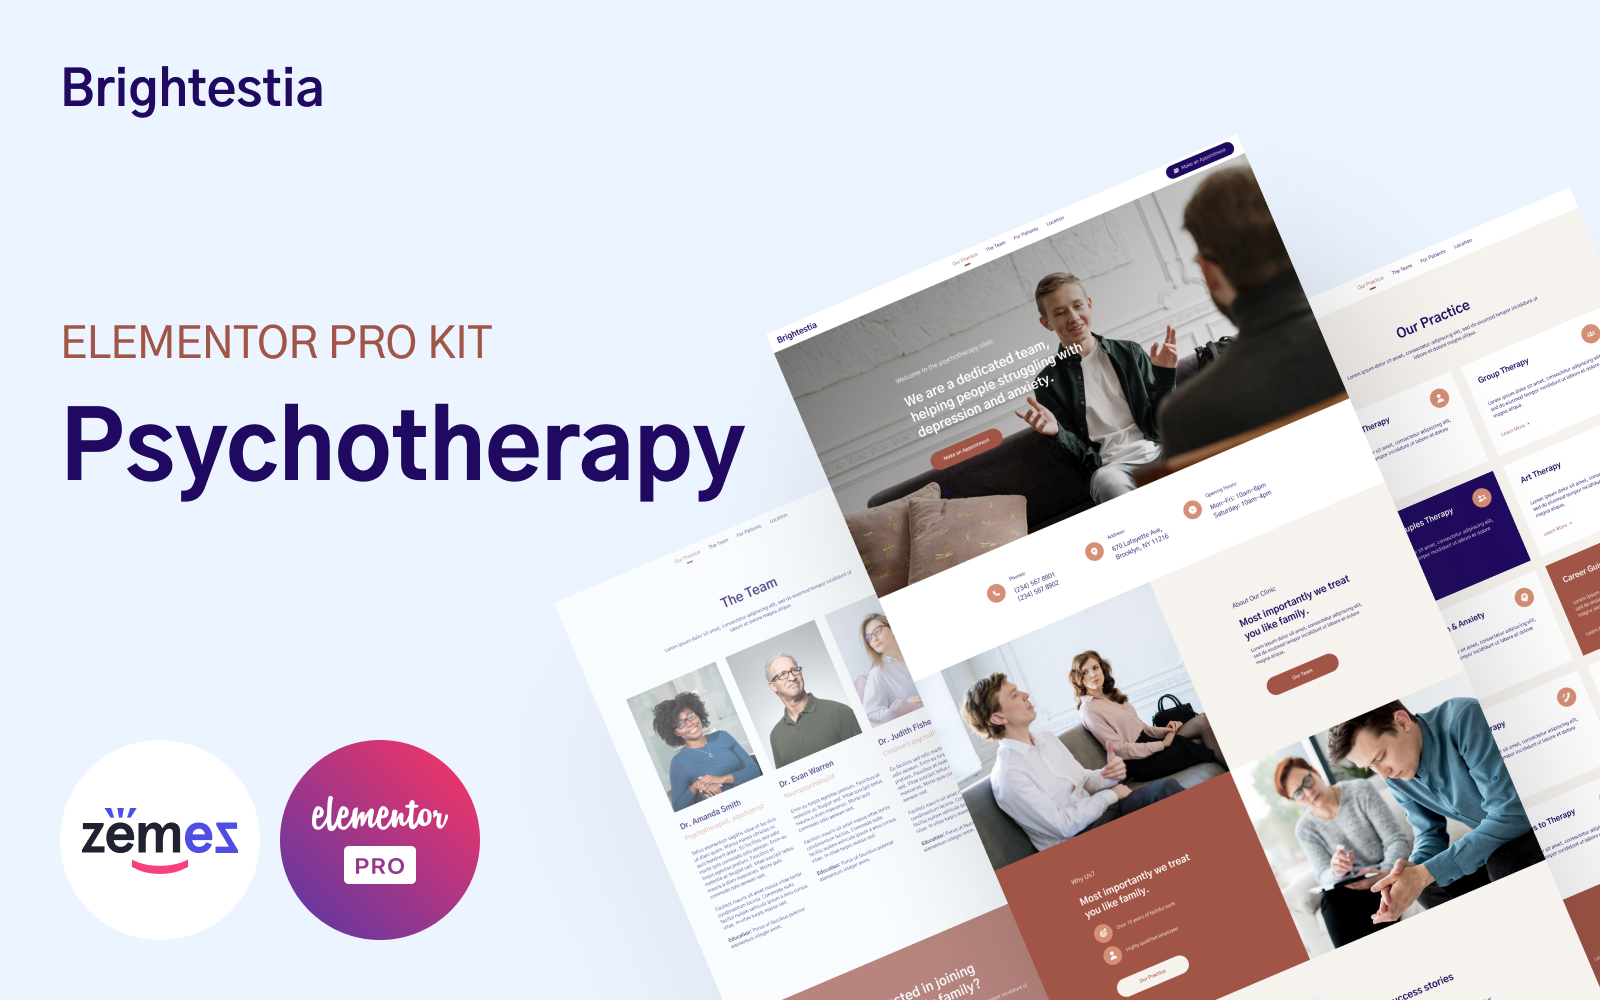 Brightestia - Psychotherapy Elementor Kit